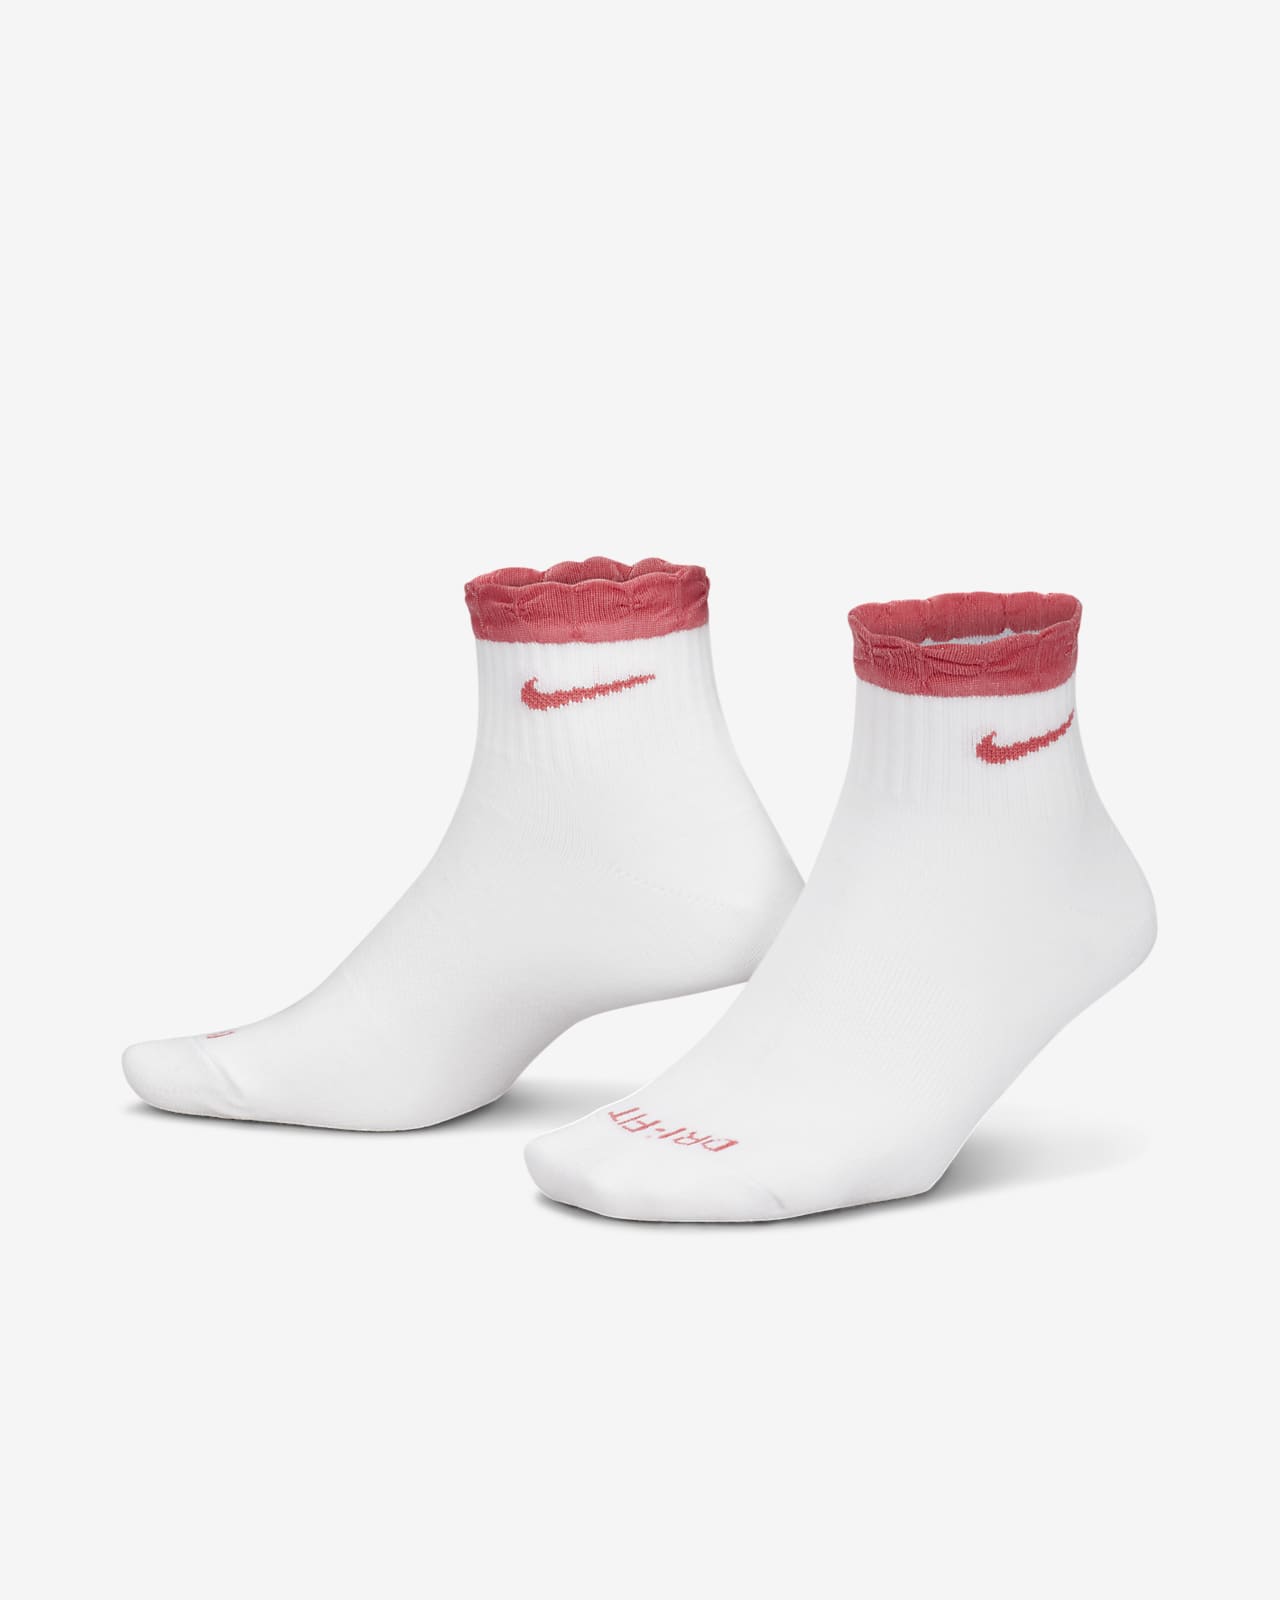 Nike Everyday Women's Training Ankle Socks